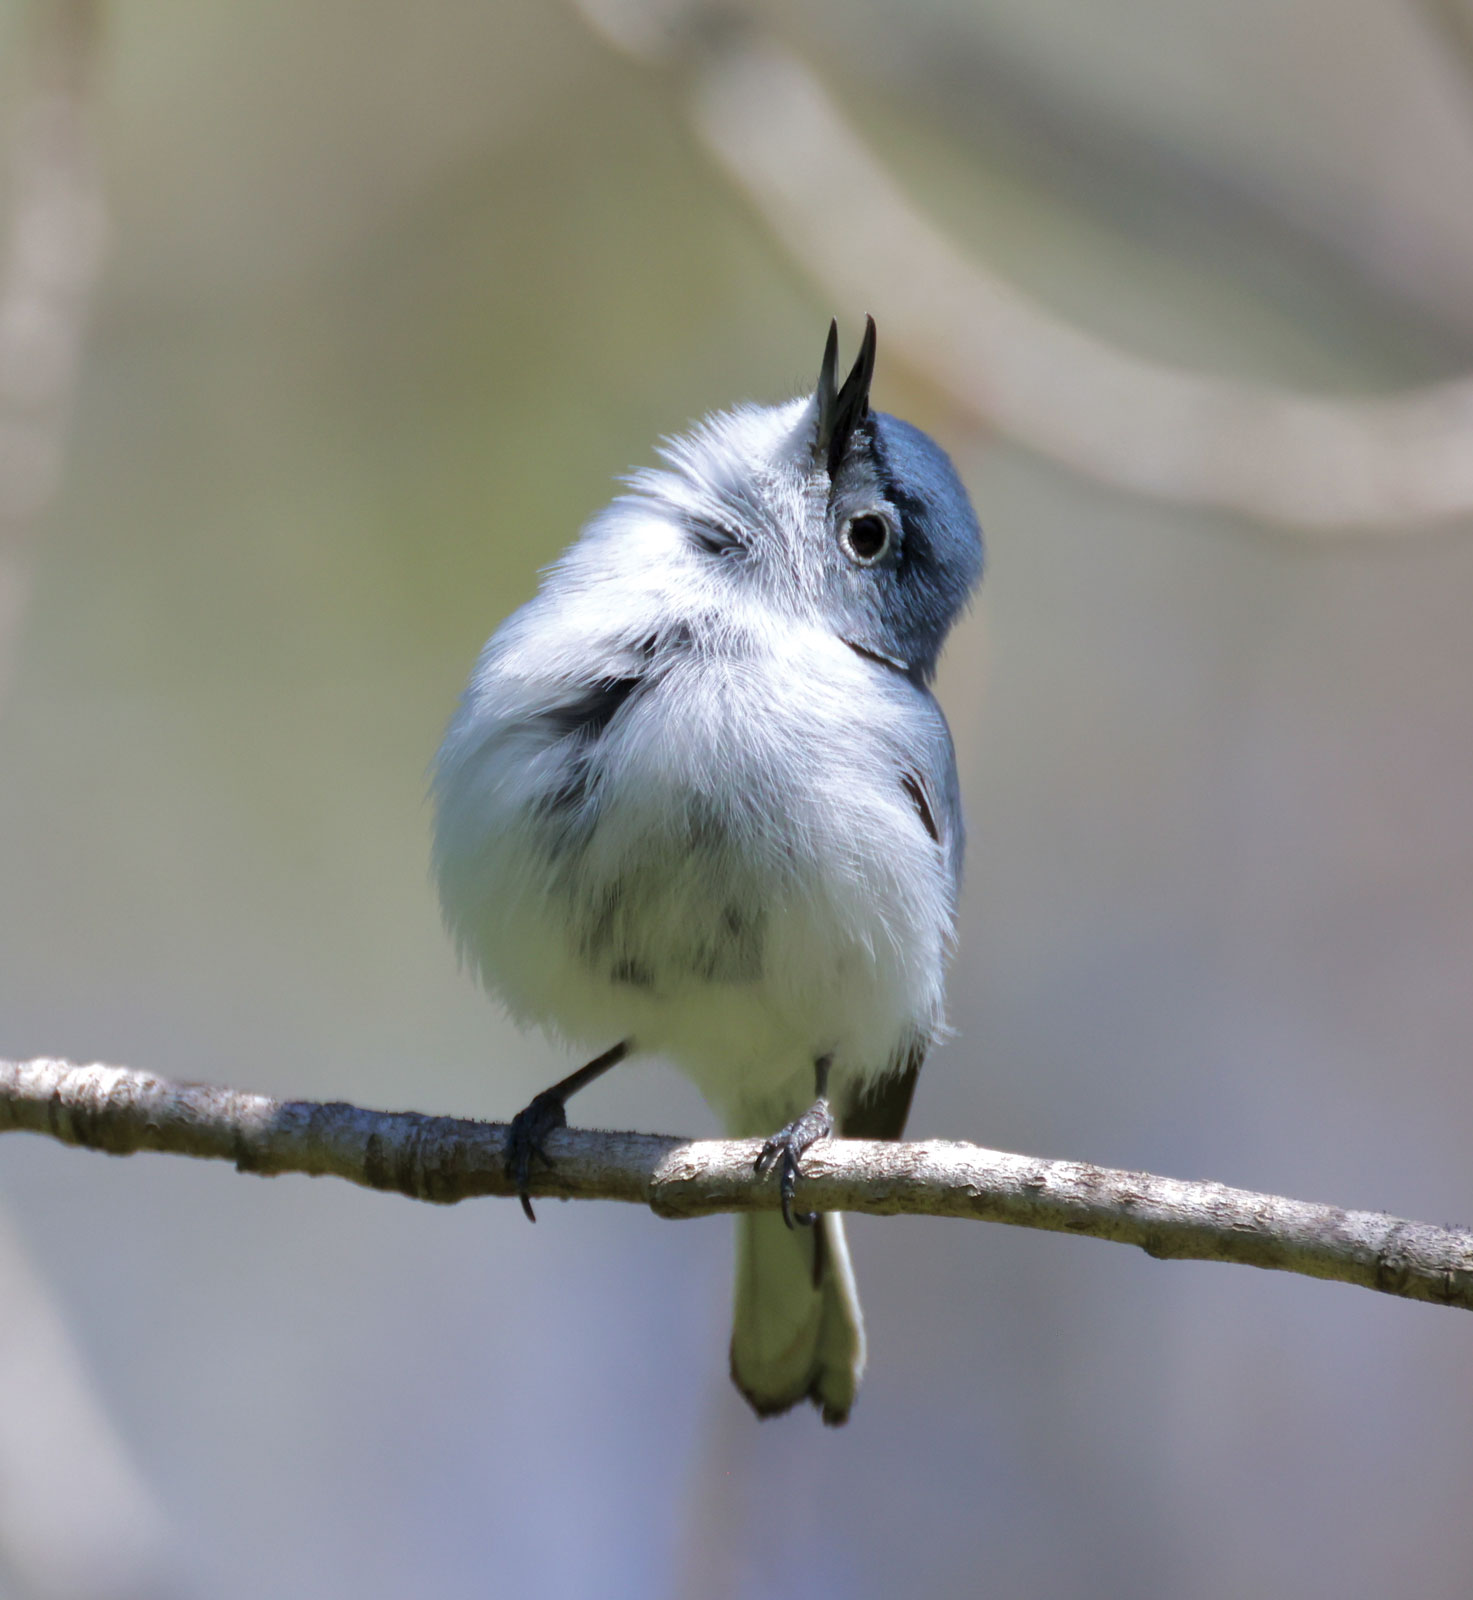 Bluebird sitting on a slim twig with an open beak tweeting upward. | By Cheryl Rosenfeld